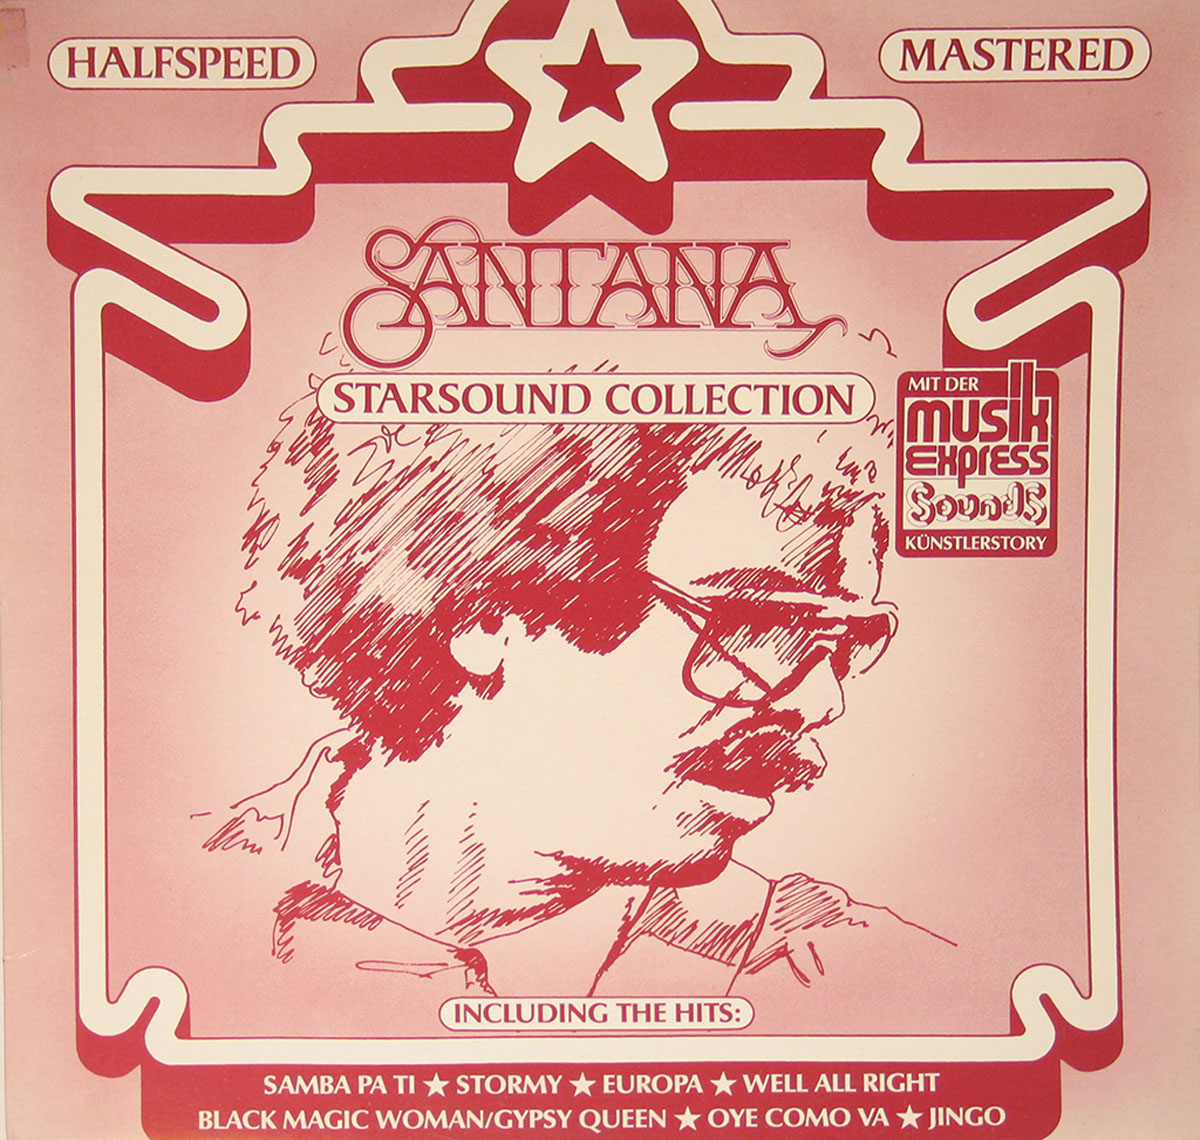 High Resolution Photos of santana starsound collection audiophile half speed mastered 